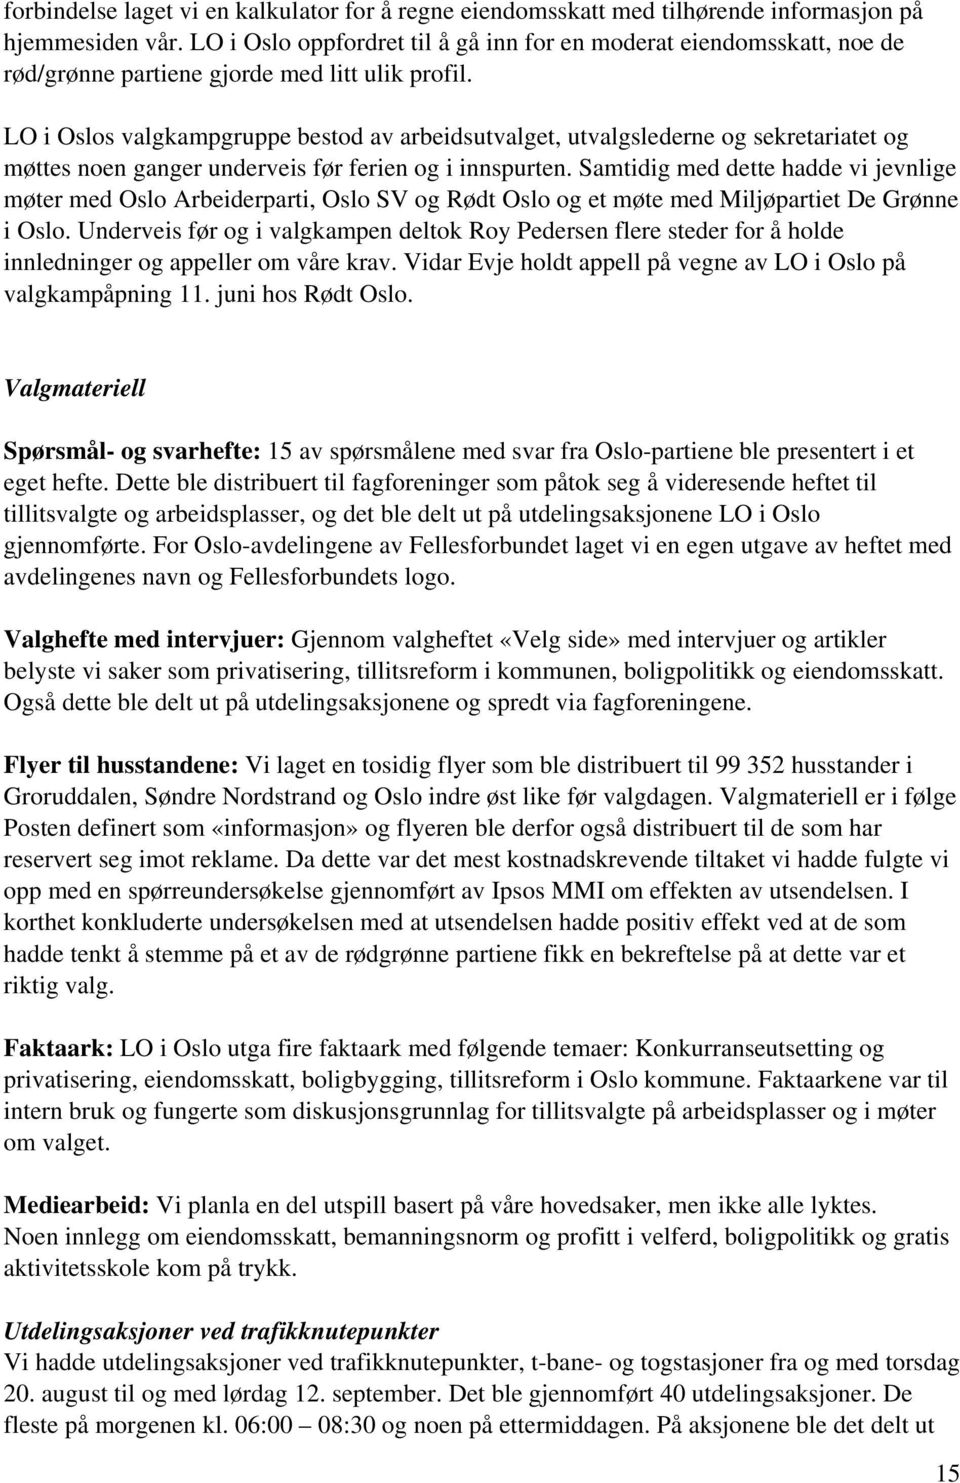 LO i Oslos årsmøte sak 2. Beretning for LO i Oslo - PDF Free Download